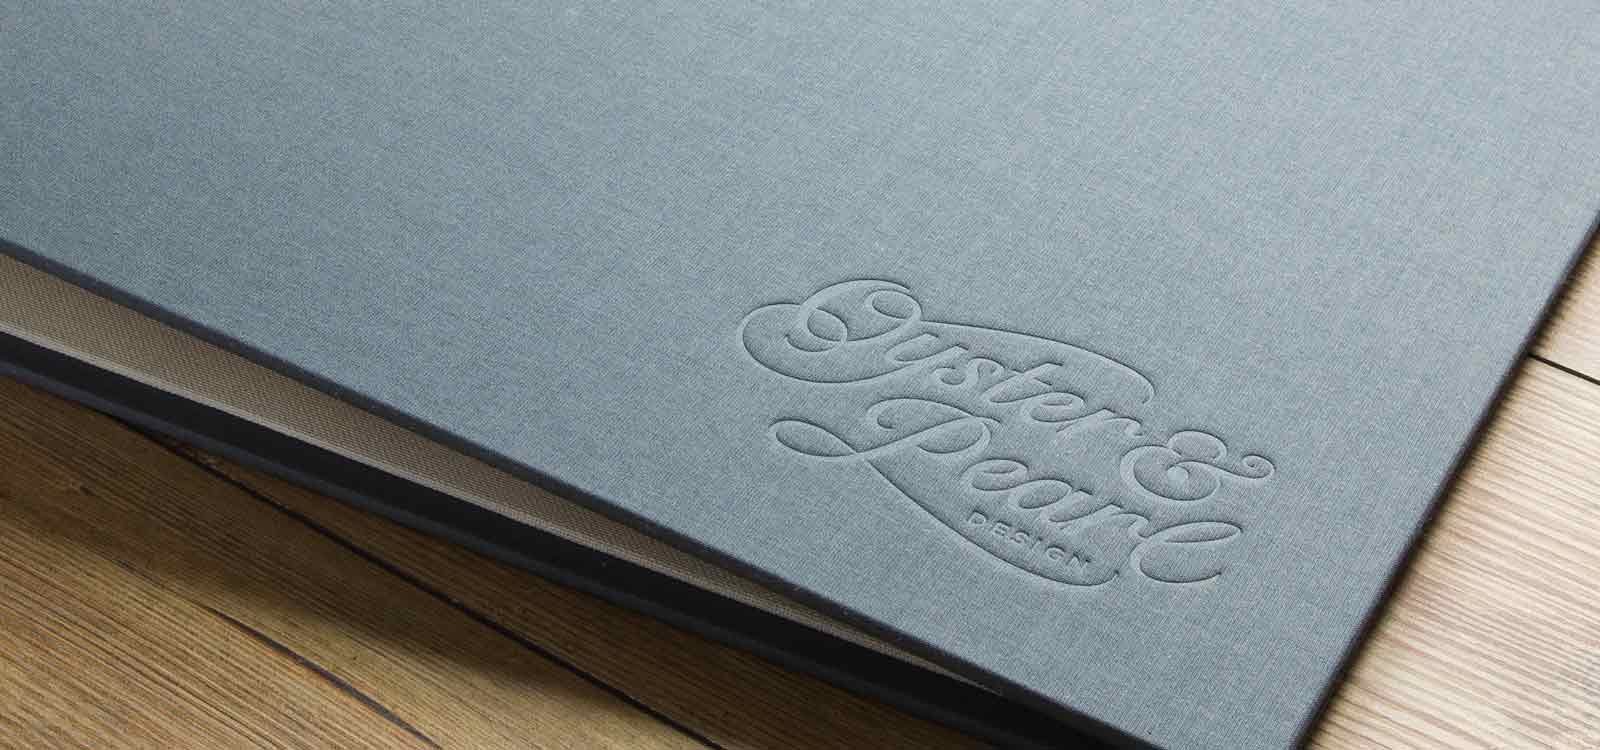 graphic design presentation portfolio book custom made with embossed logo a3 landscape